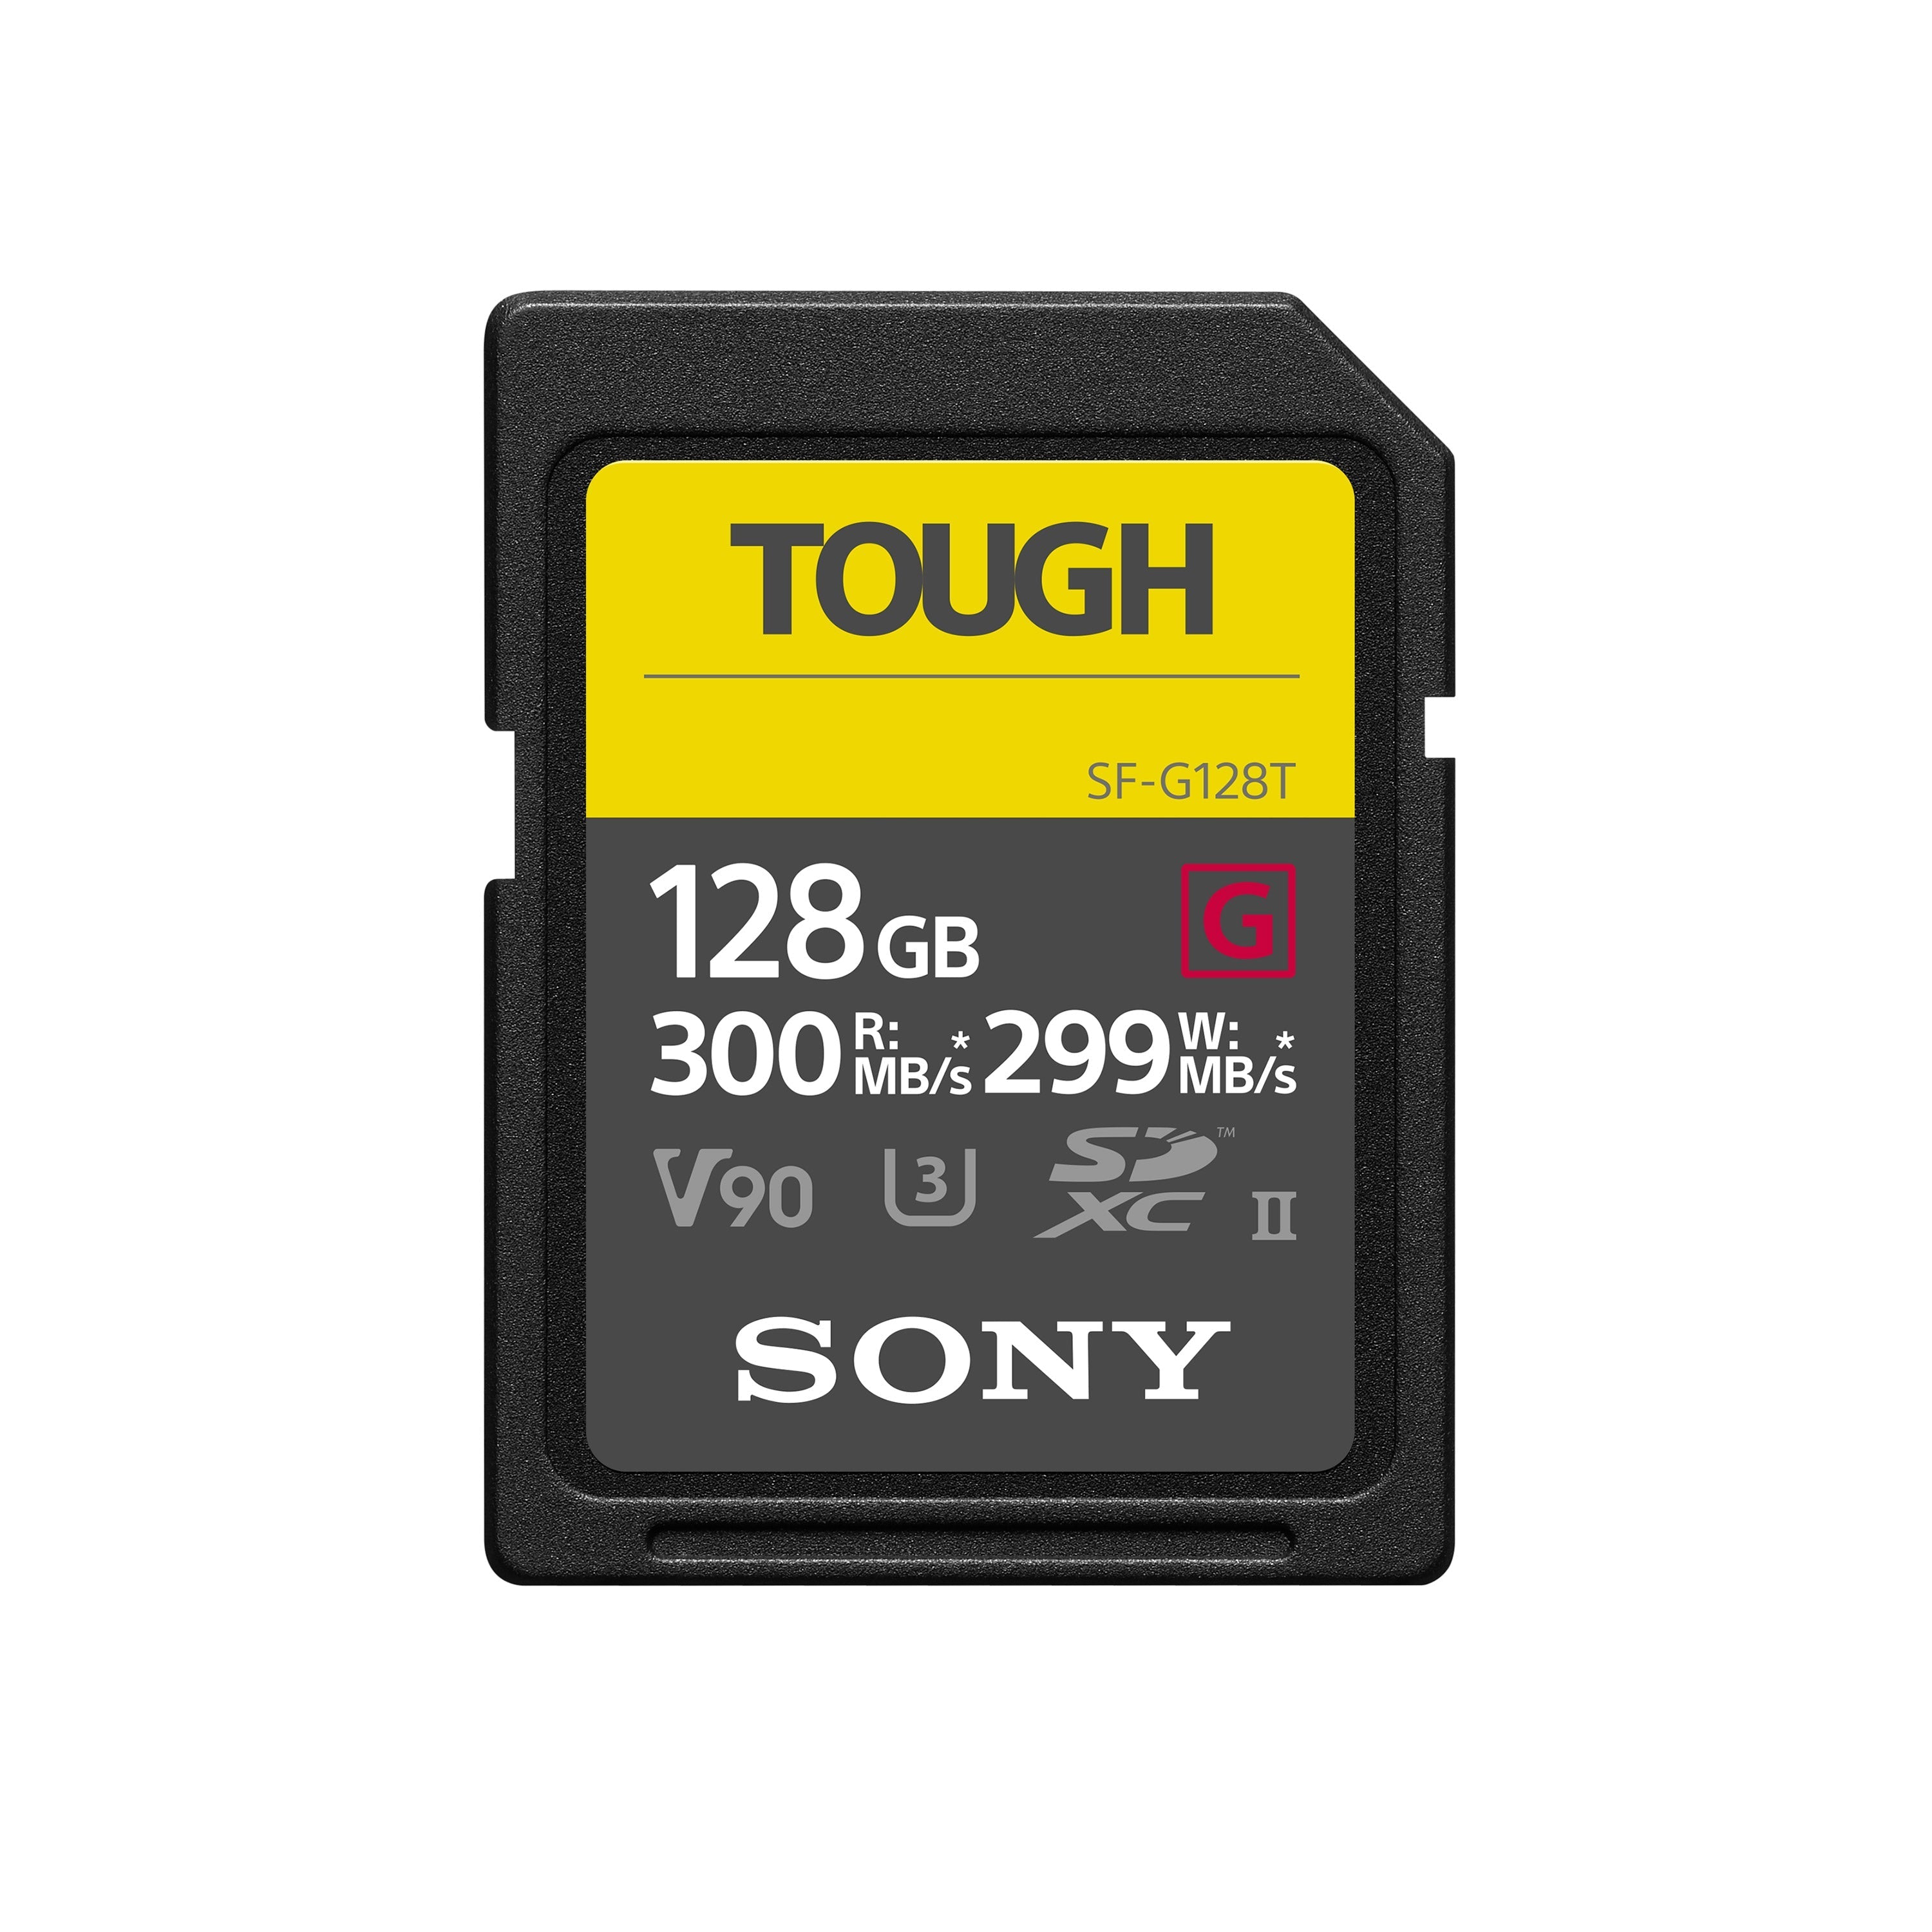 Sony TOUGH G Series UHS-II SDXC Memory Card